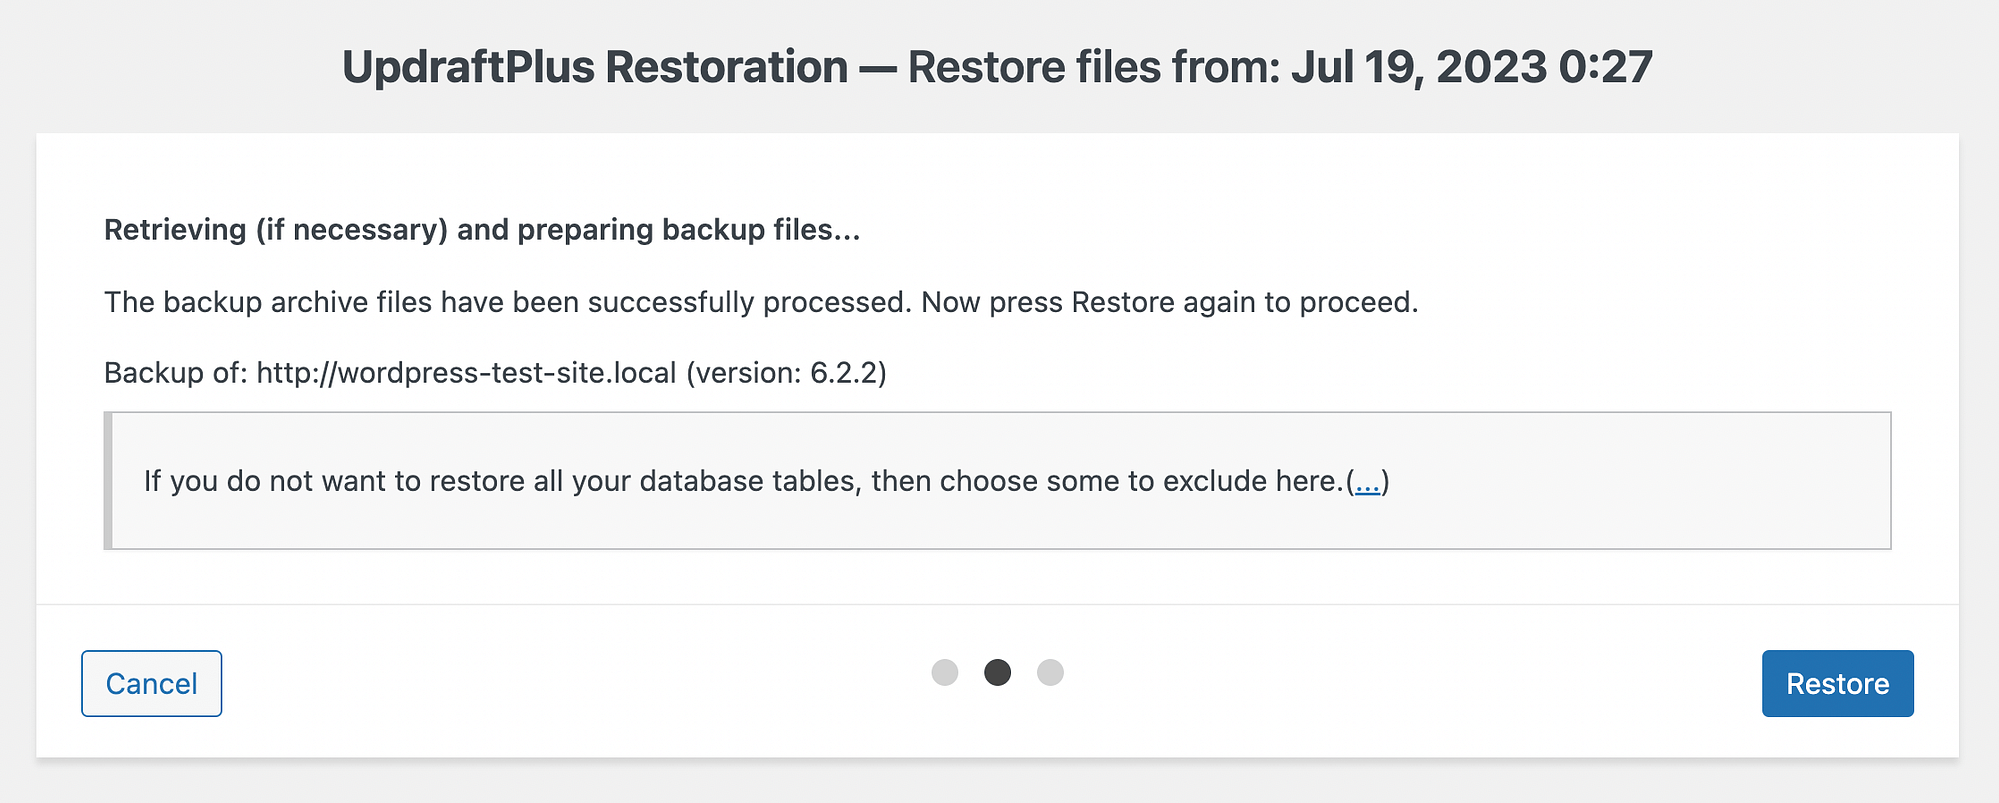 Botón de restauración UpdraftPlus.